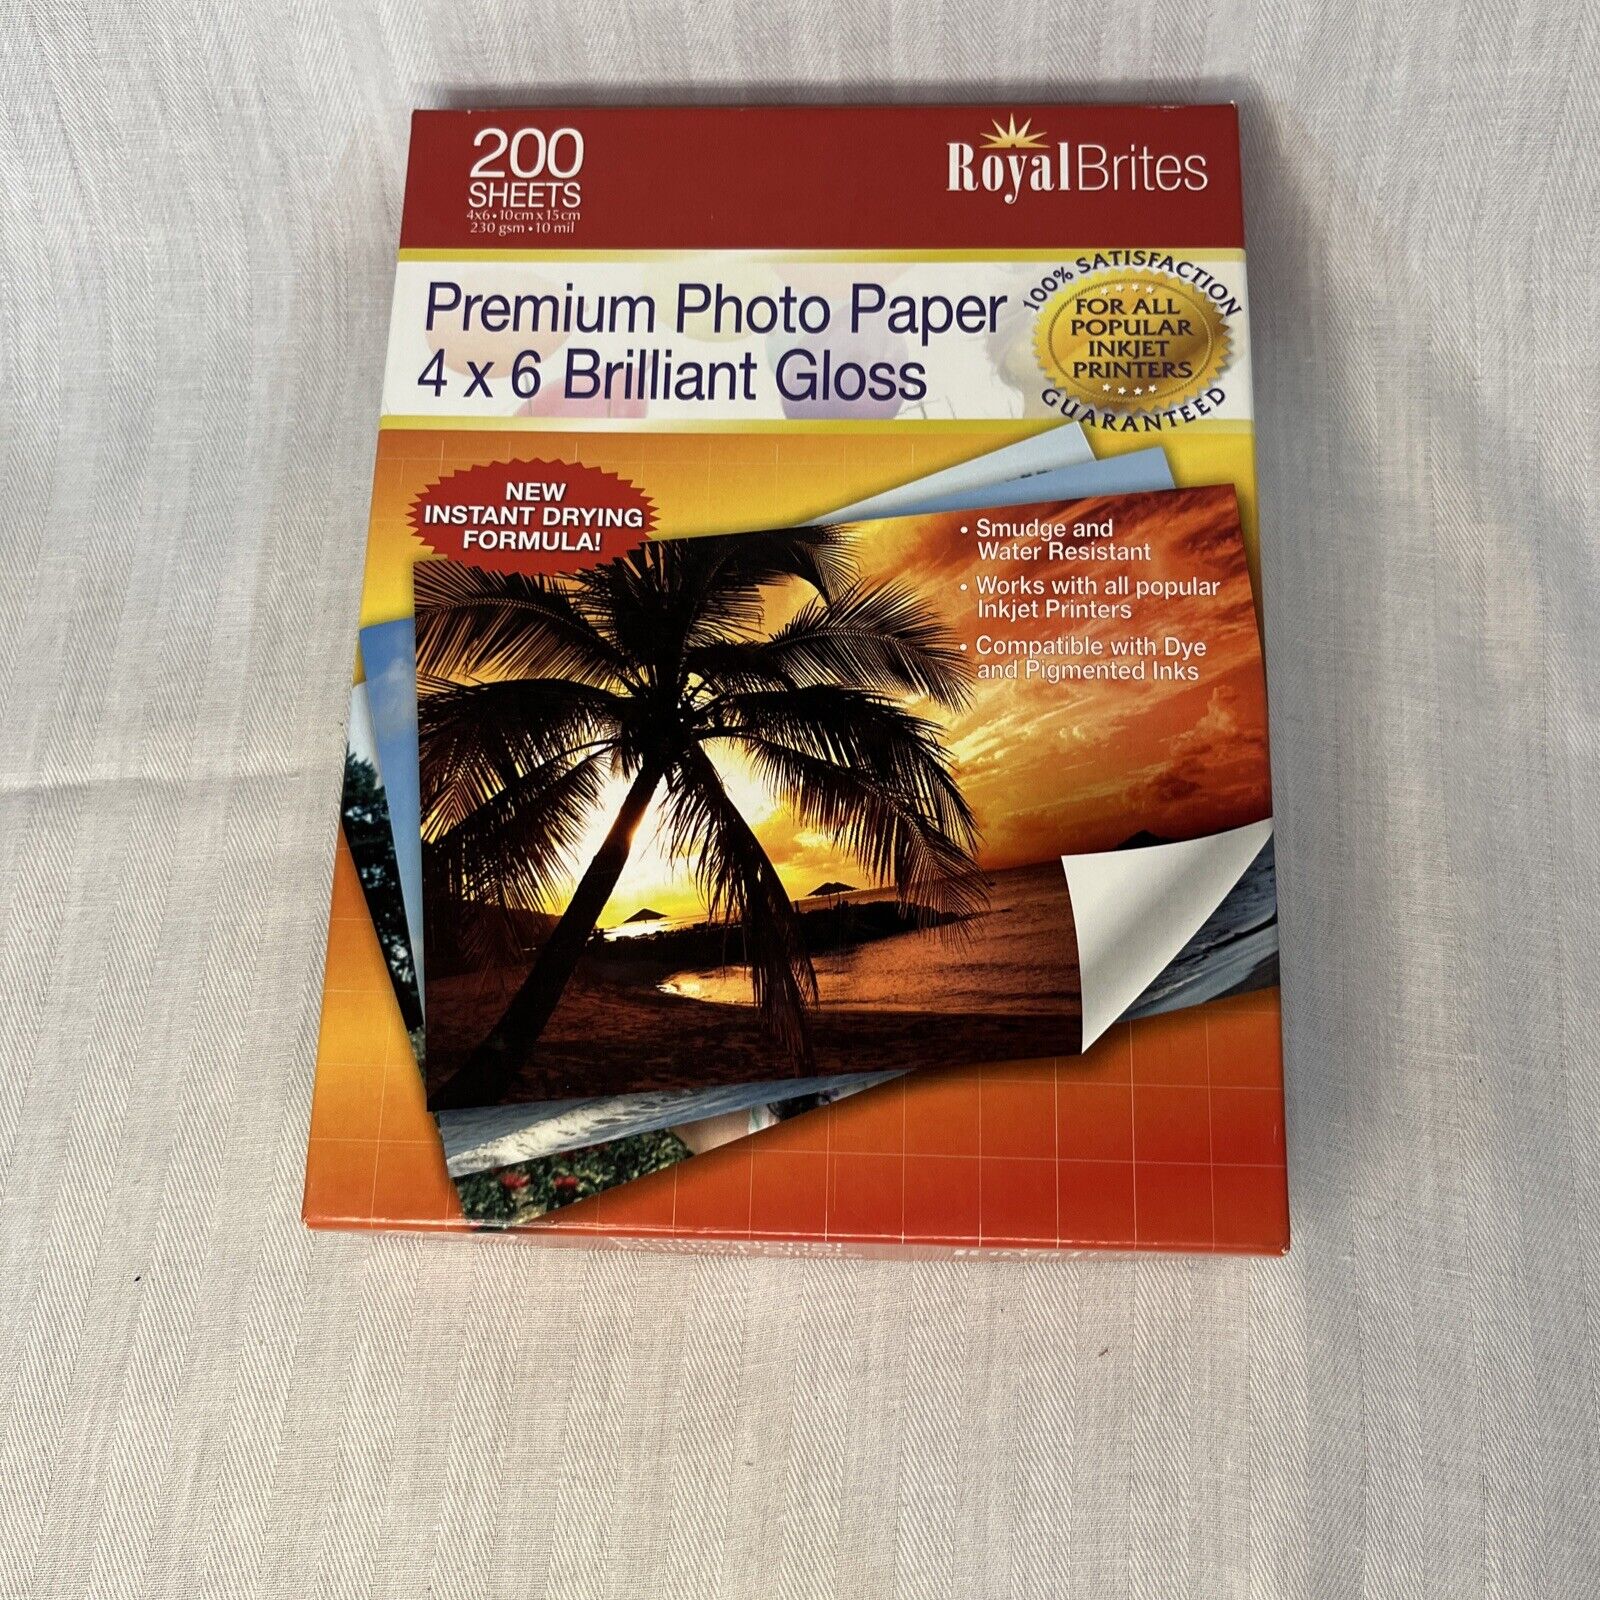 Royal Brites Premium Photo Paper 4 x 6 Brilliant Gloss Inkjet About 190 Sheets